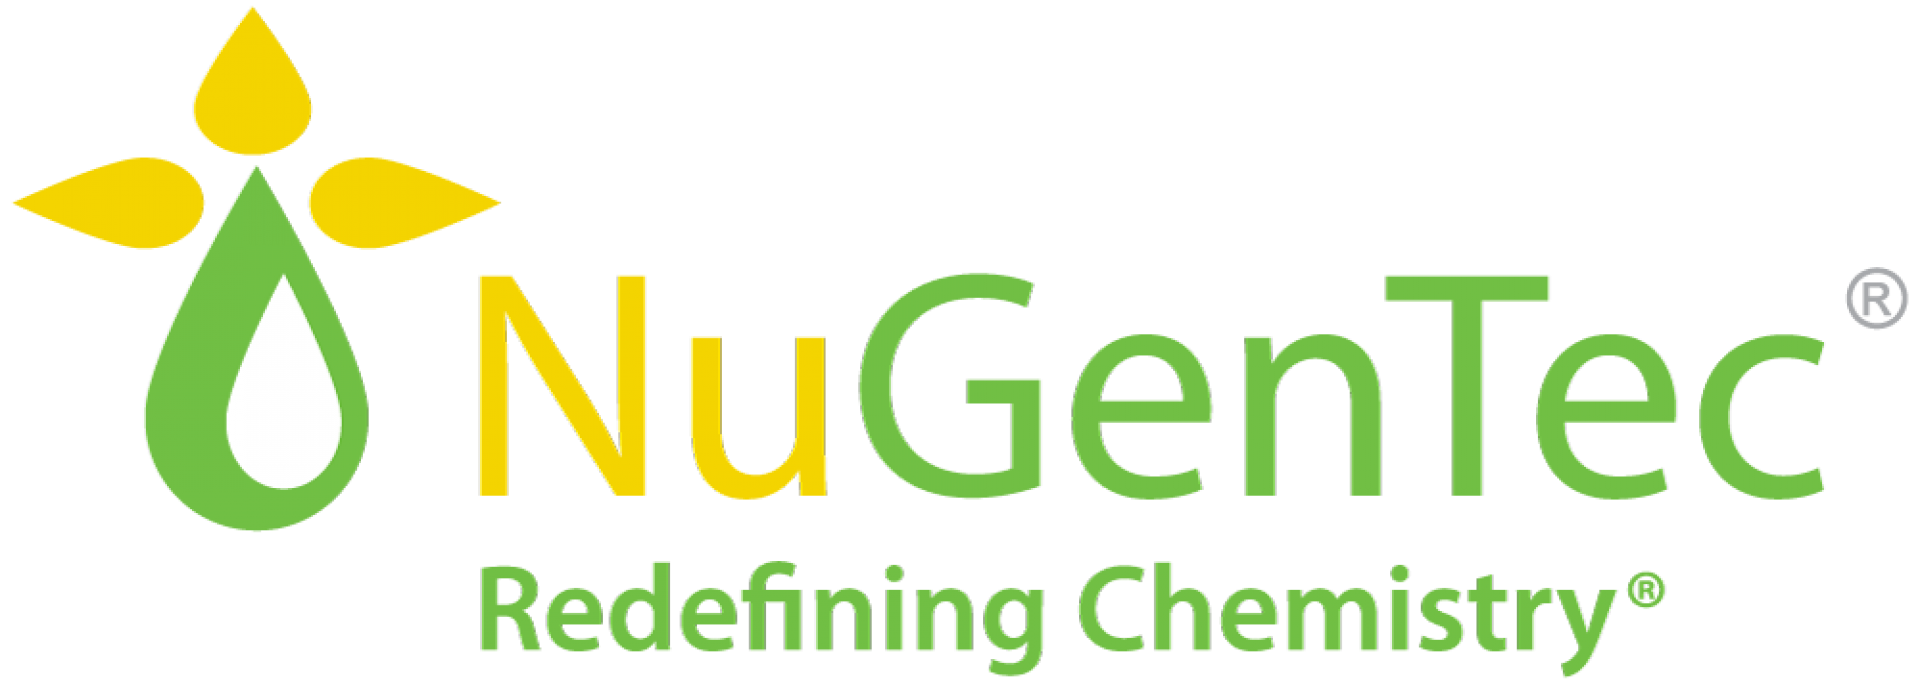 NuGenTec Logo with Slogan - Redefining Chemistry